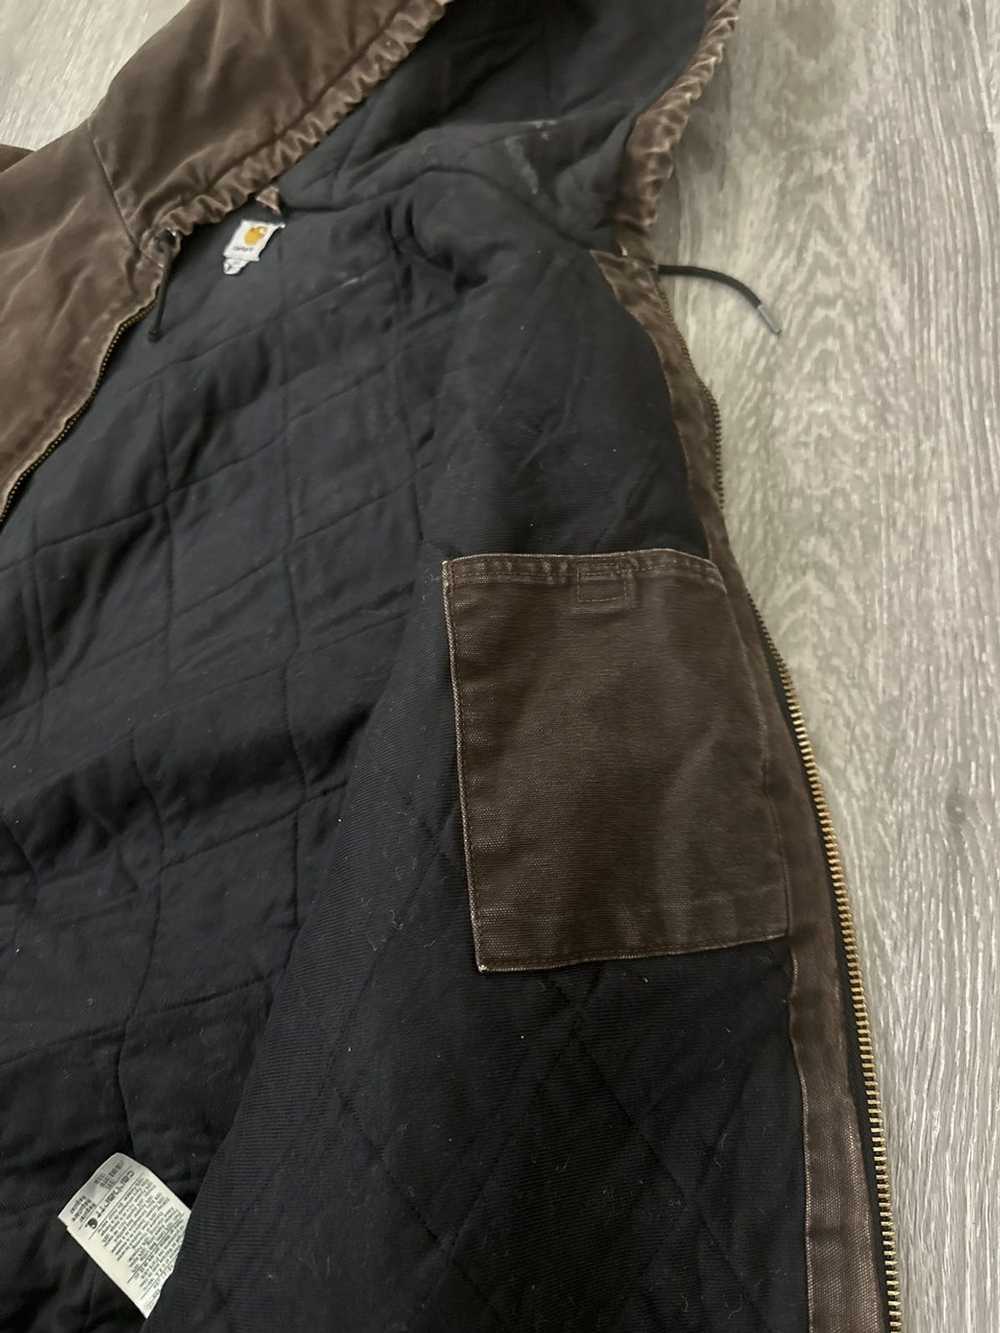 Carhartt Carhart Vintage Work Jacket - image 3